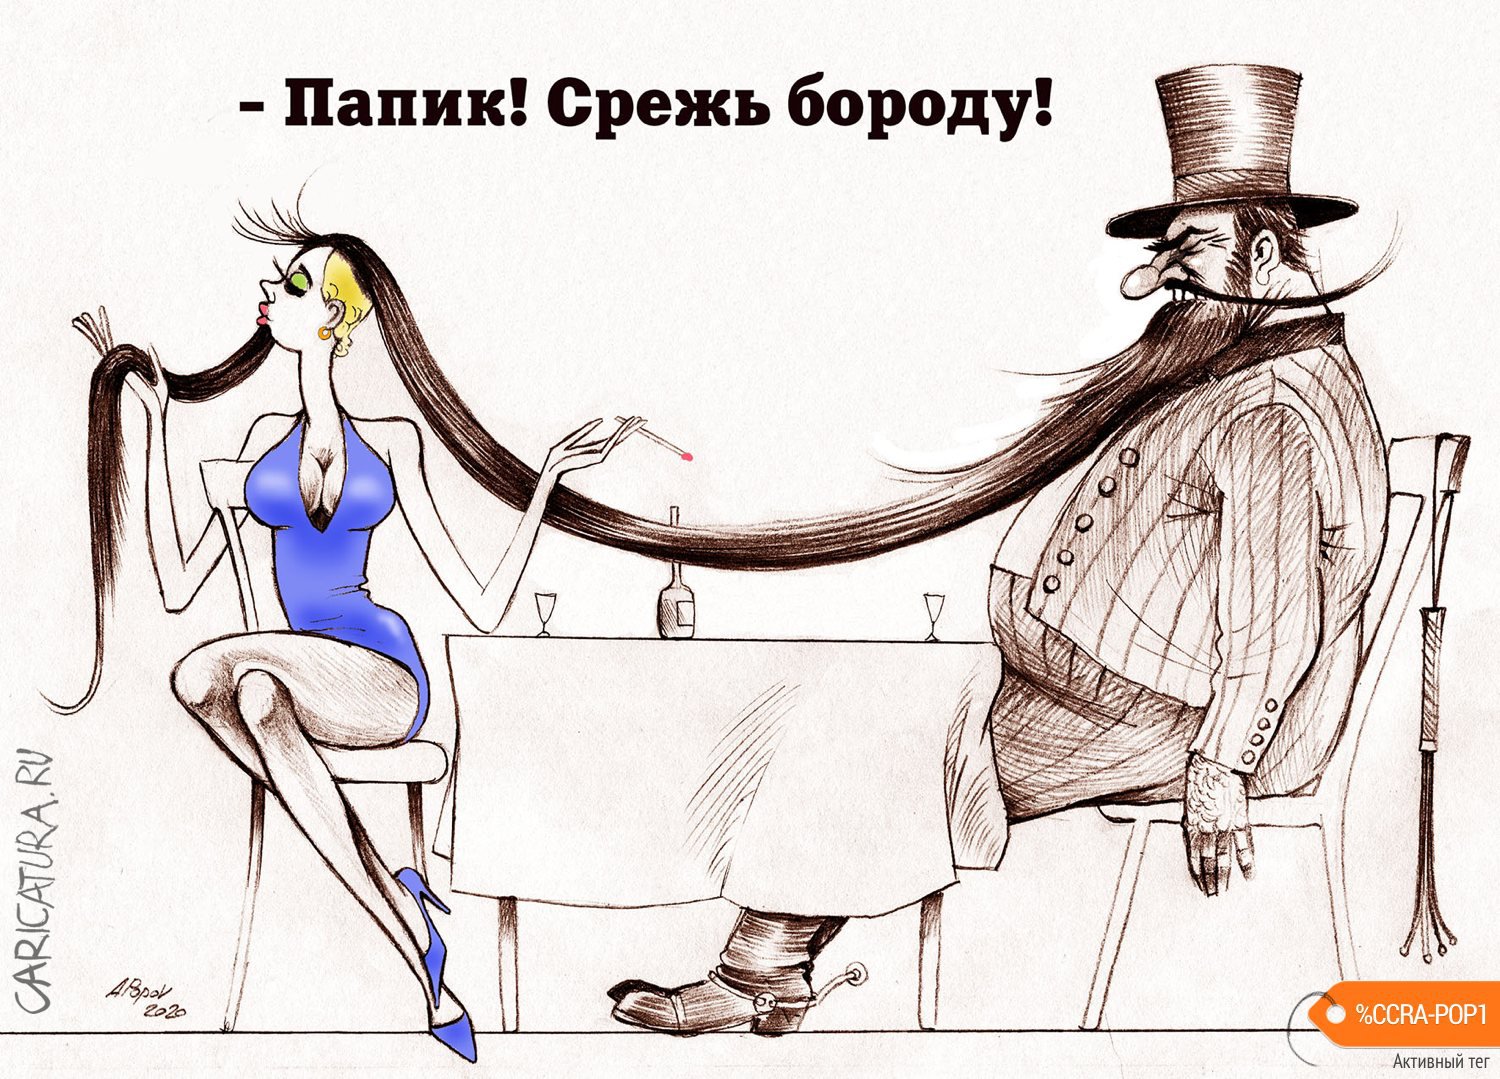 Карикатура "Мальвина краса - длинная коса", Александр Попов